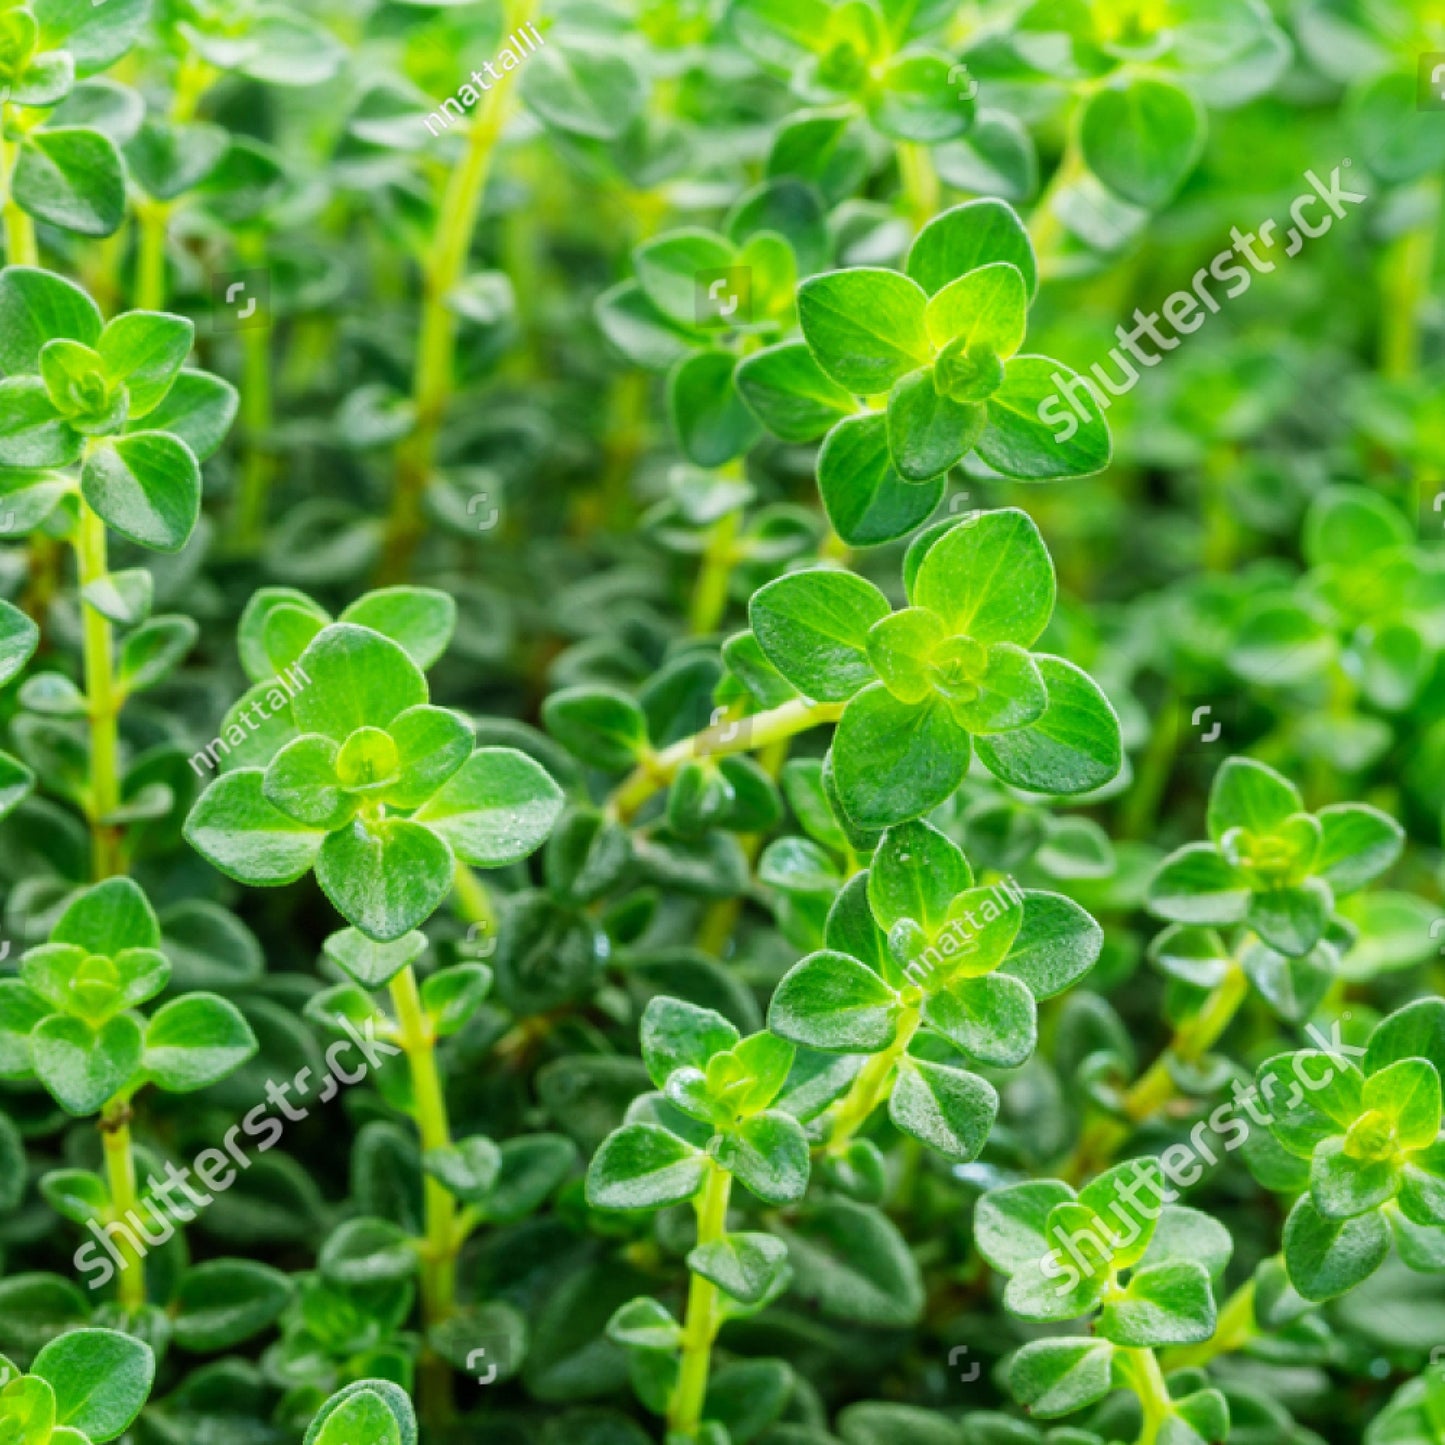 Herb Plants - English Thyme - 2 x Full Plants in 9cm Pots